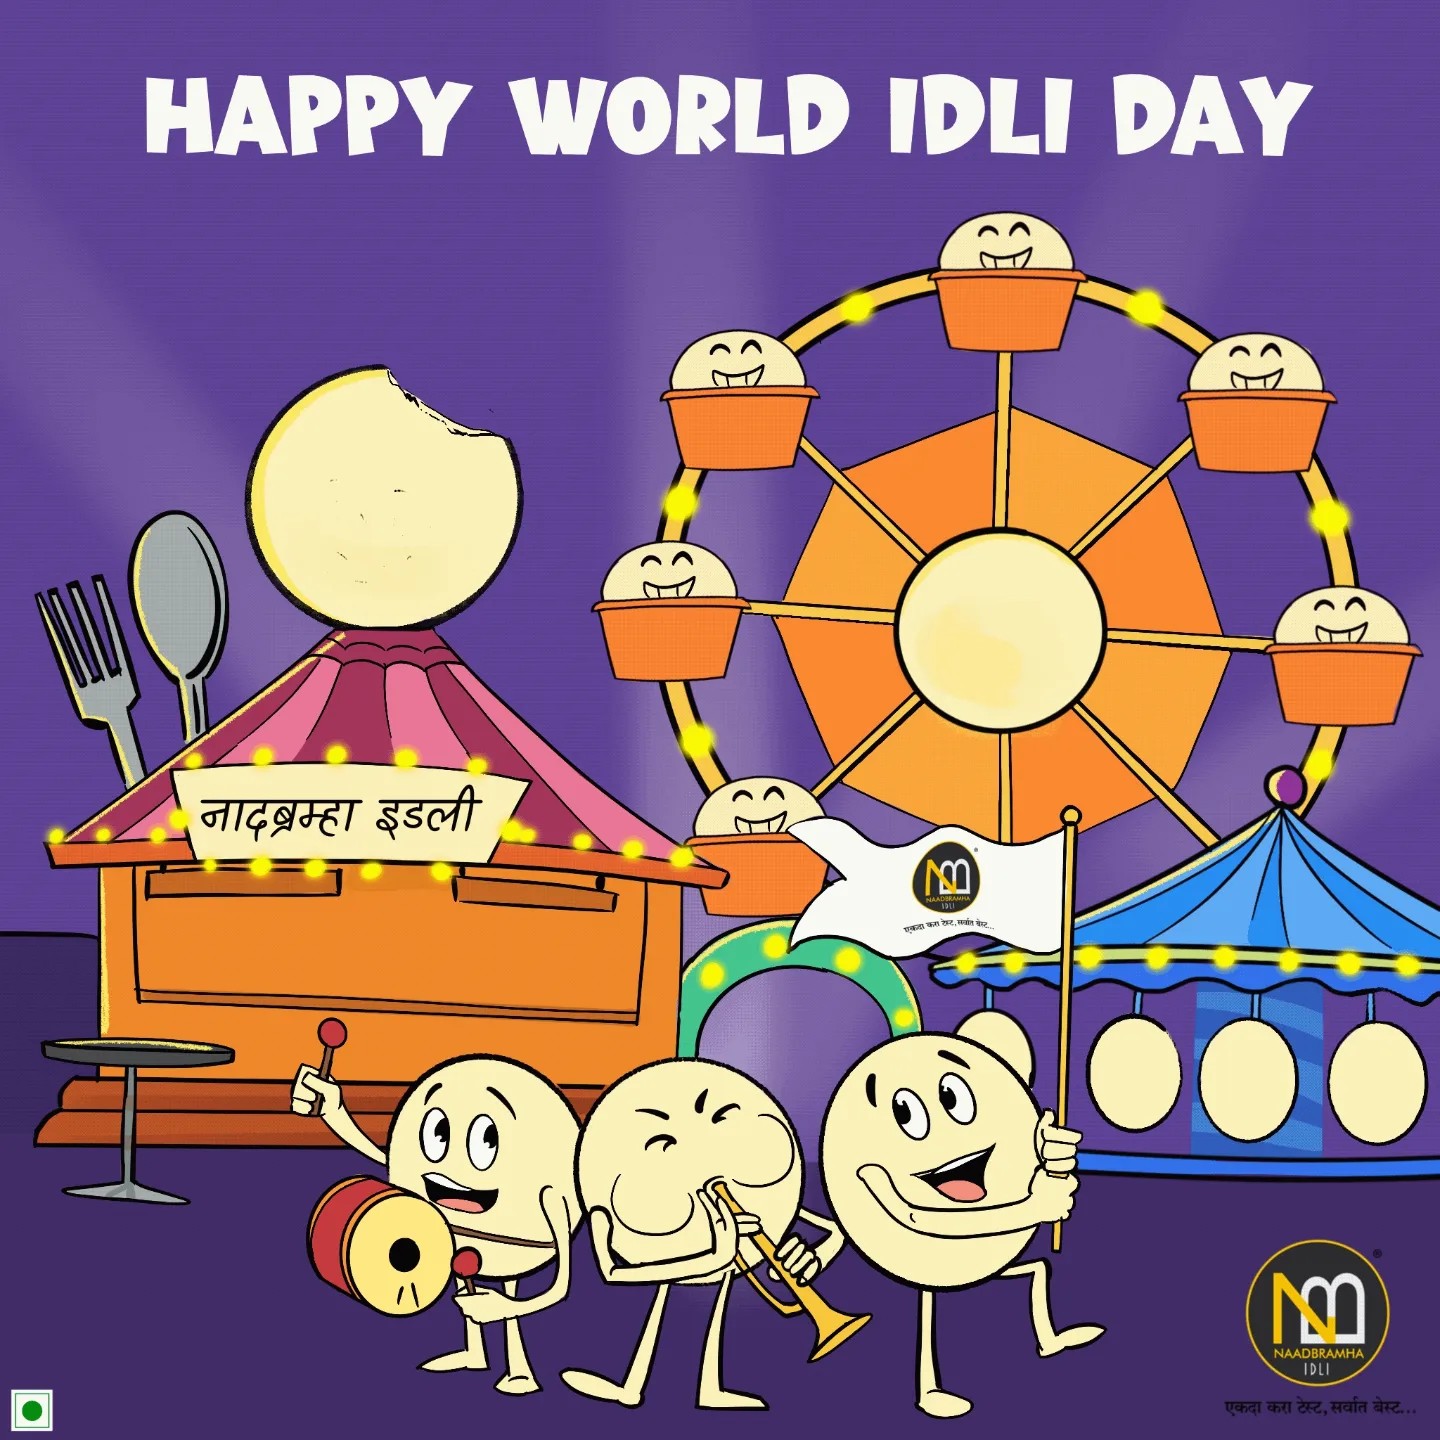 Celebrating World Idli Day with Naadbramha Idli - India's No. 1 Idli Brand